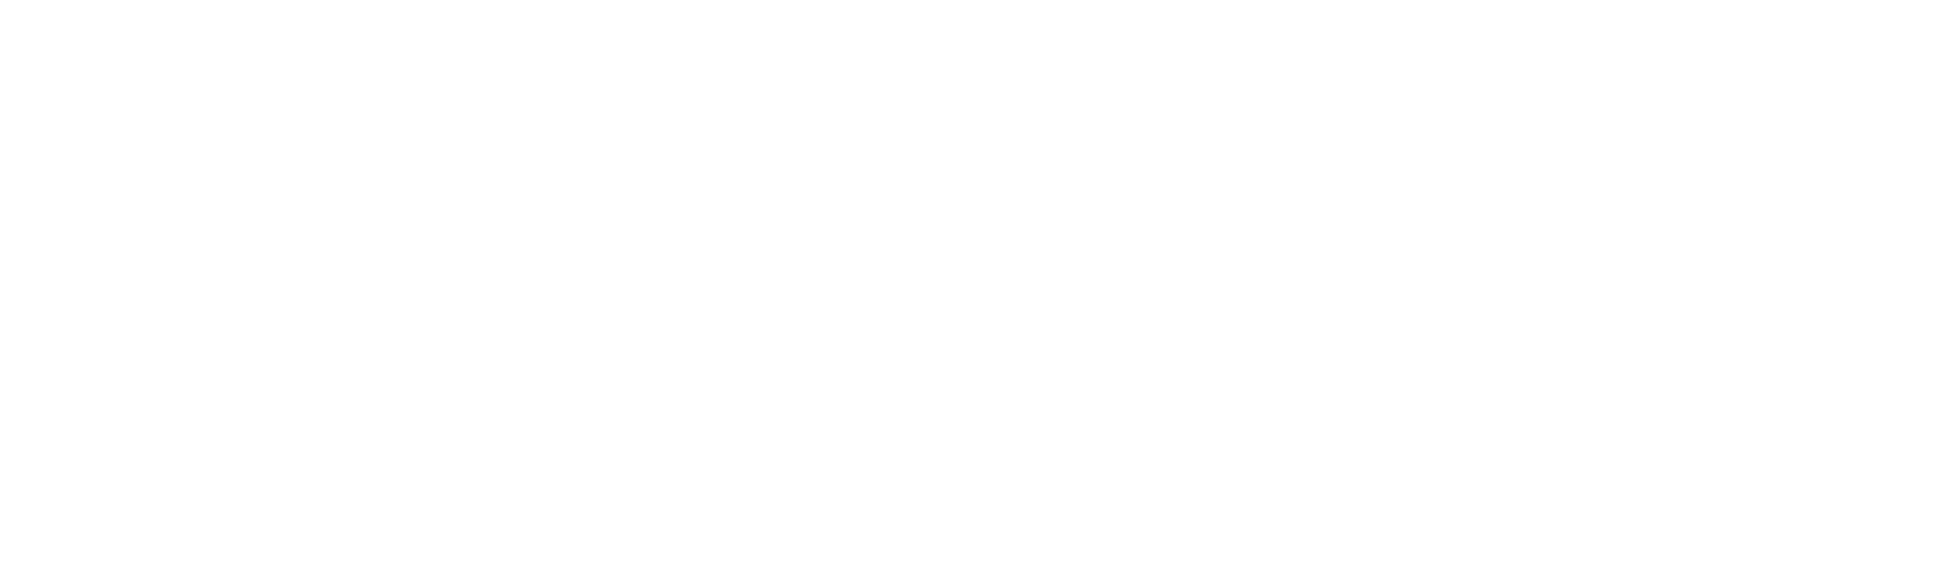 The Lane Logo - The Allen Lane Foundation | Grant-making foundation